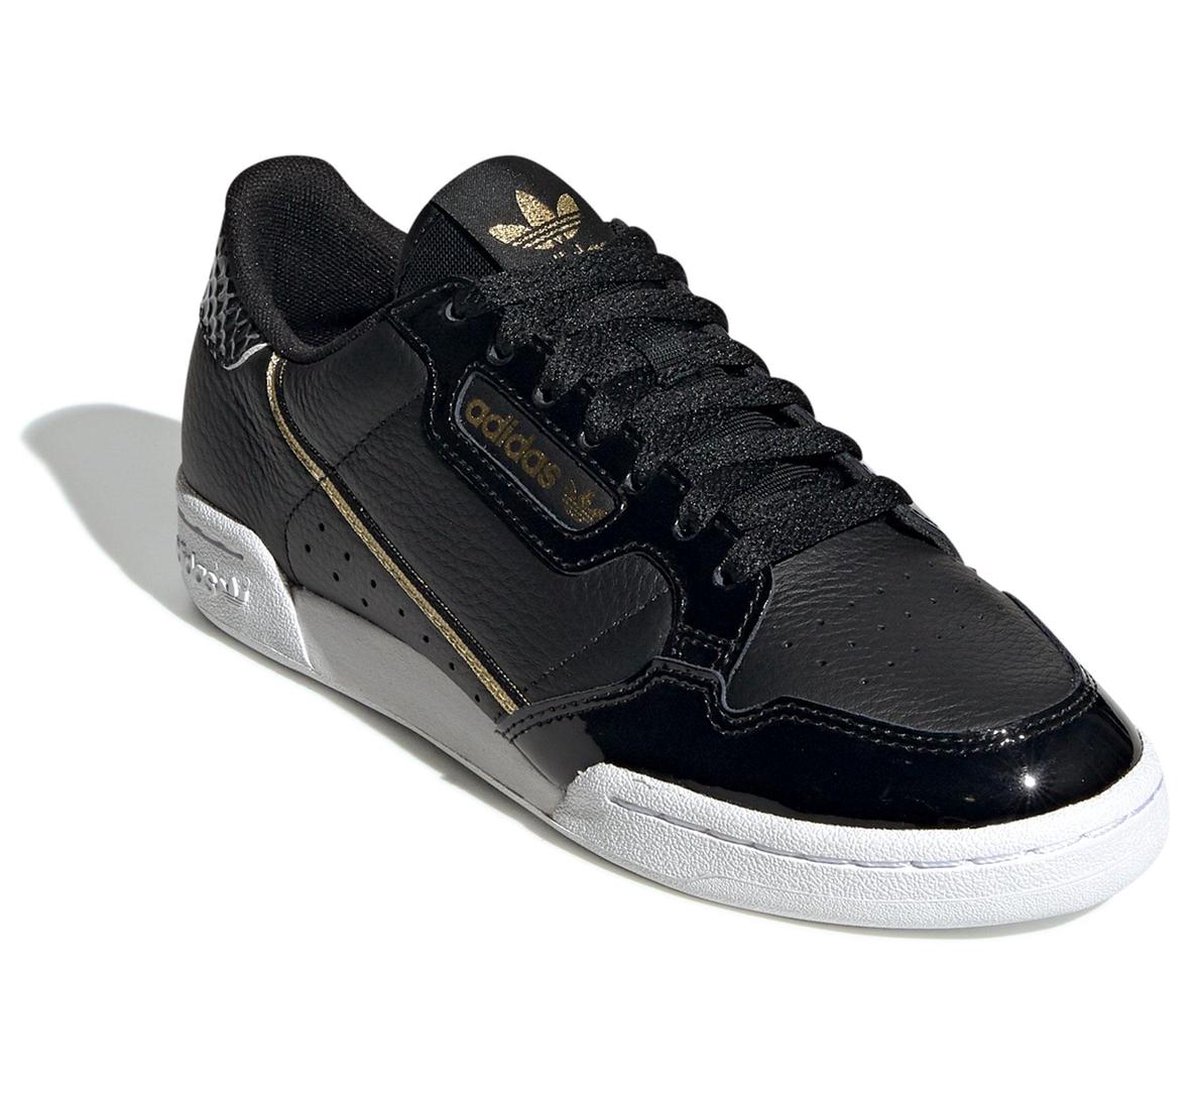 adidas Sneakers - Maat 40 2/3 - Vrouwen - zwart/goud/wit Sneakers w5mWR4Xn